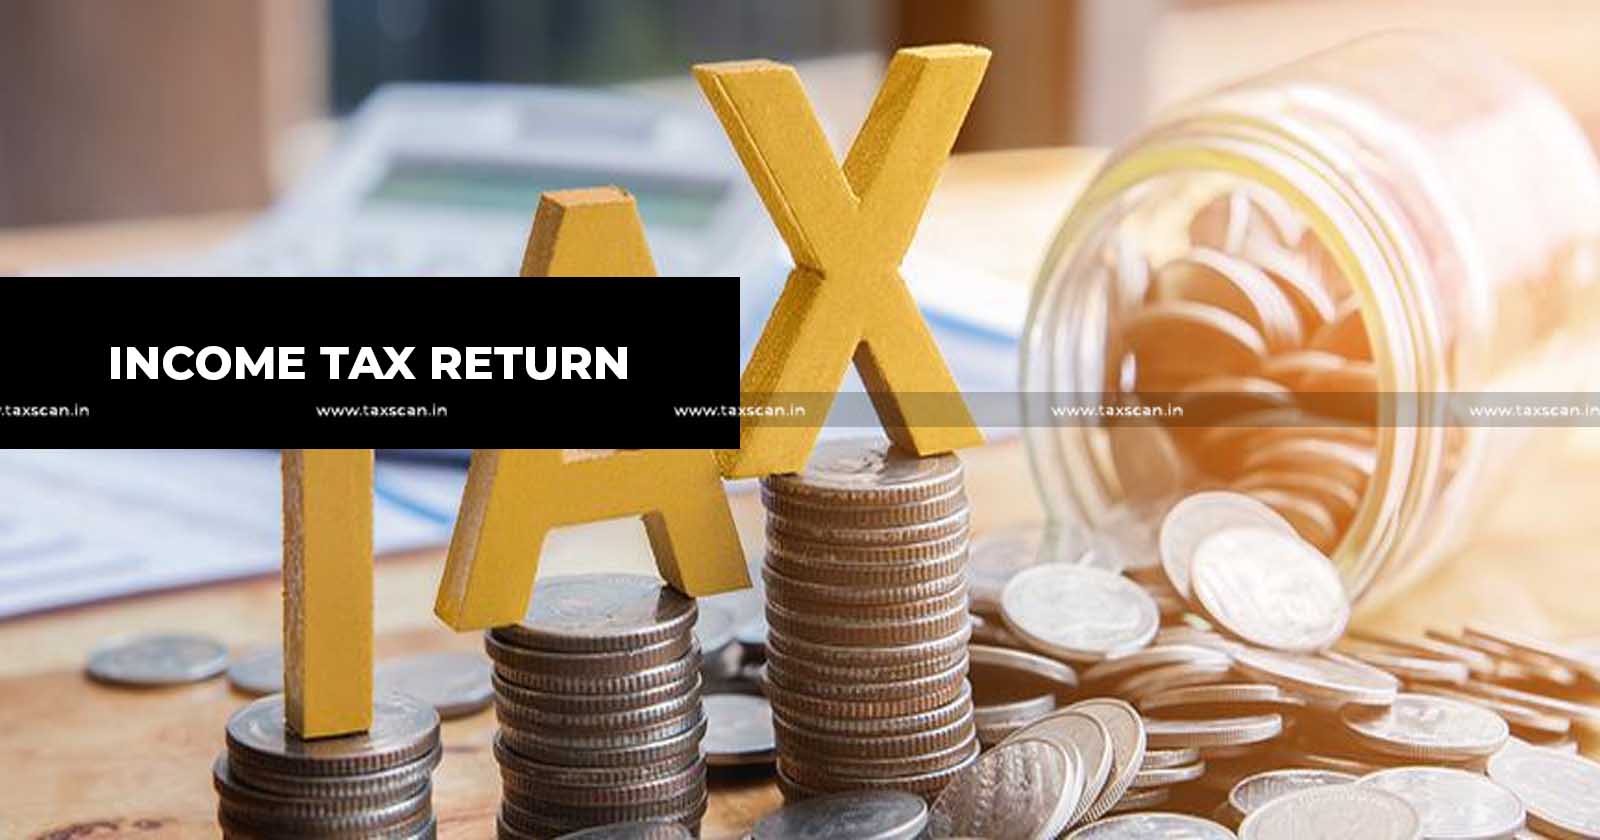 Income Tax Return - Income Tax Portal - E-Filing - CBDT - Income Tax Return on Income Tax Portal - Income Tax - taxscan